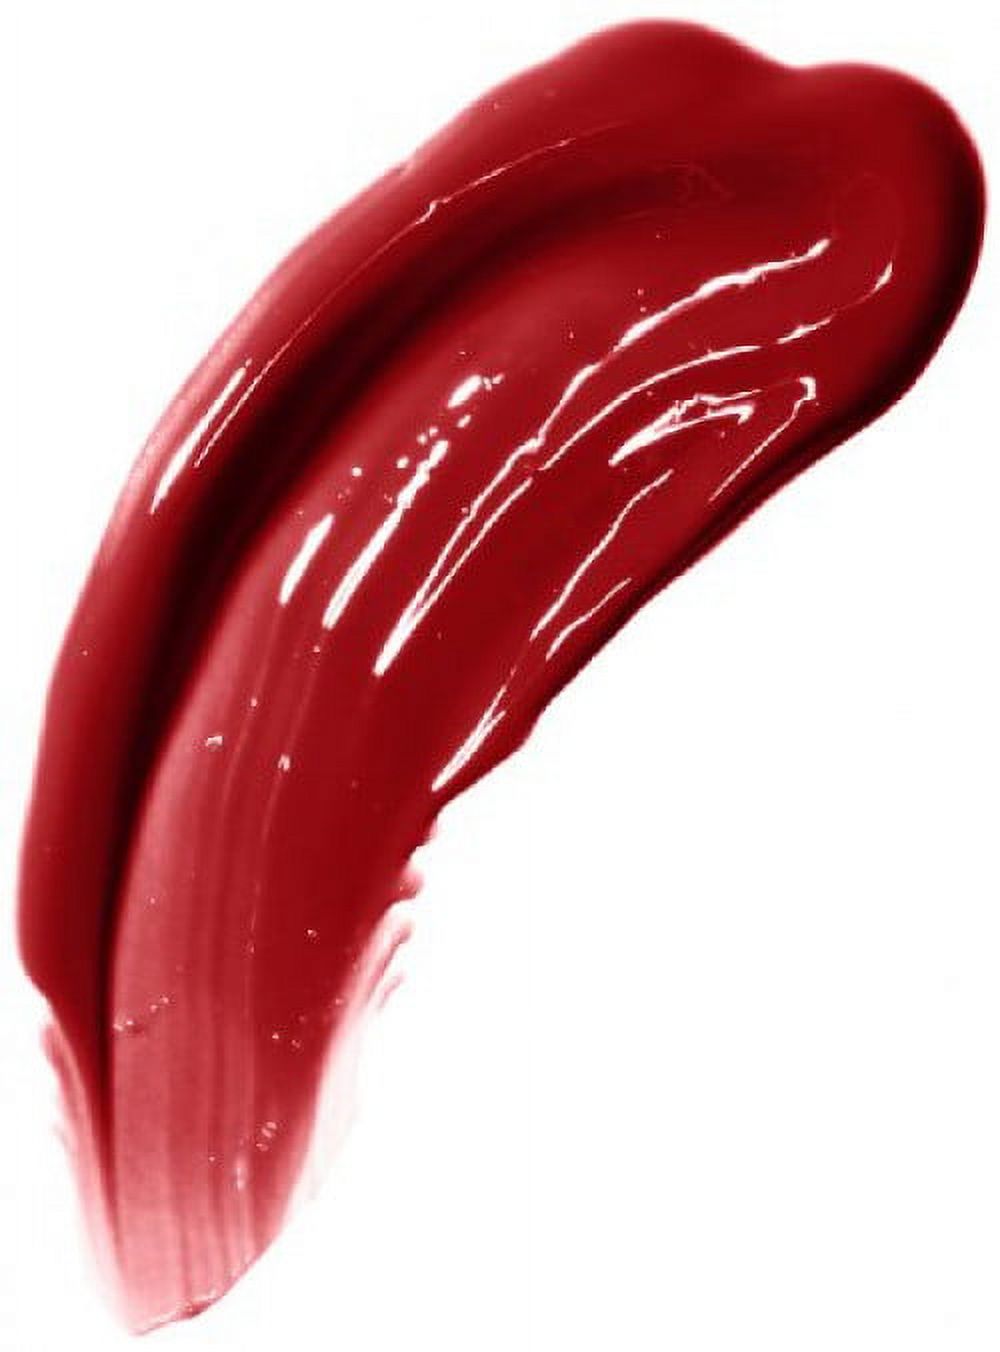 L'oreal Infallible Never Fail Lipcolour, Crimson - image 4 of 4